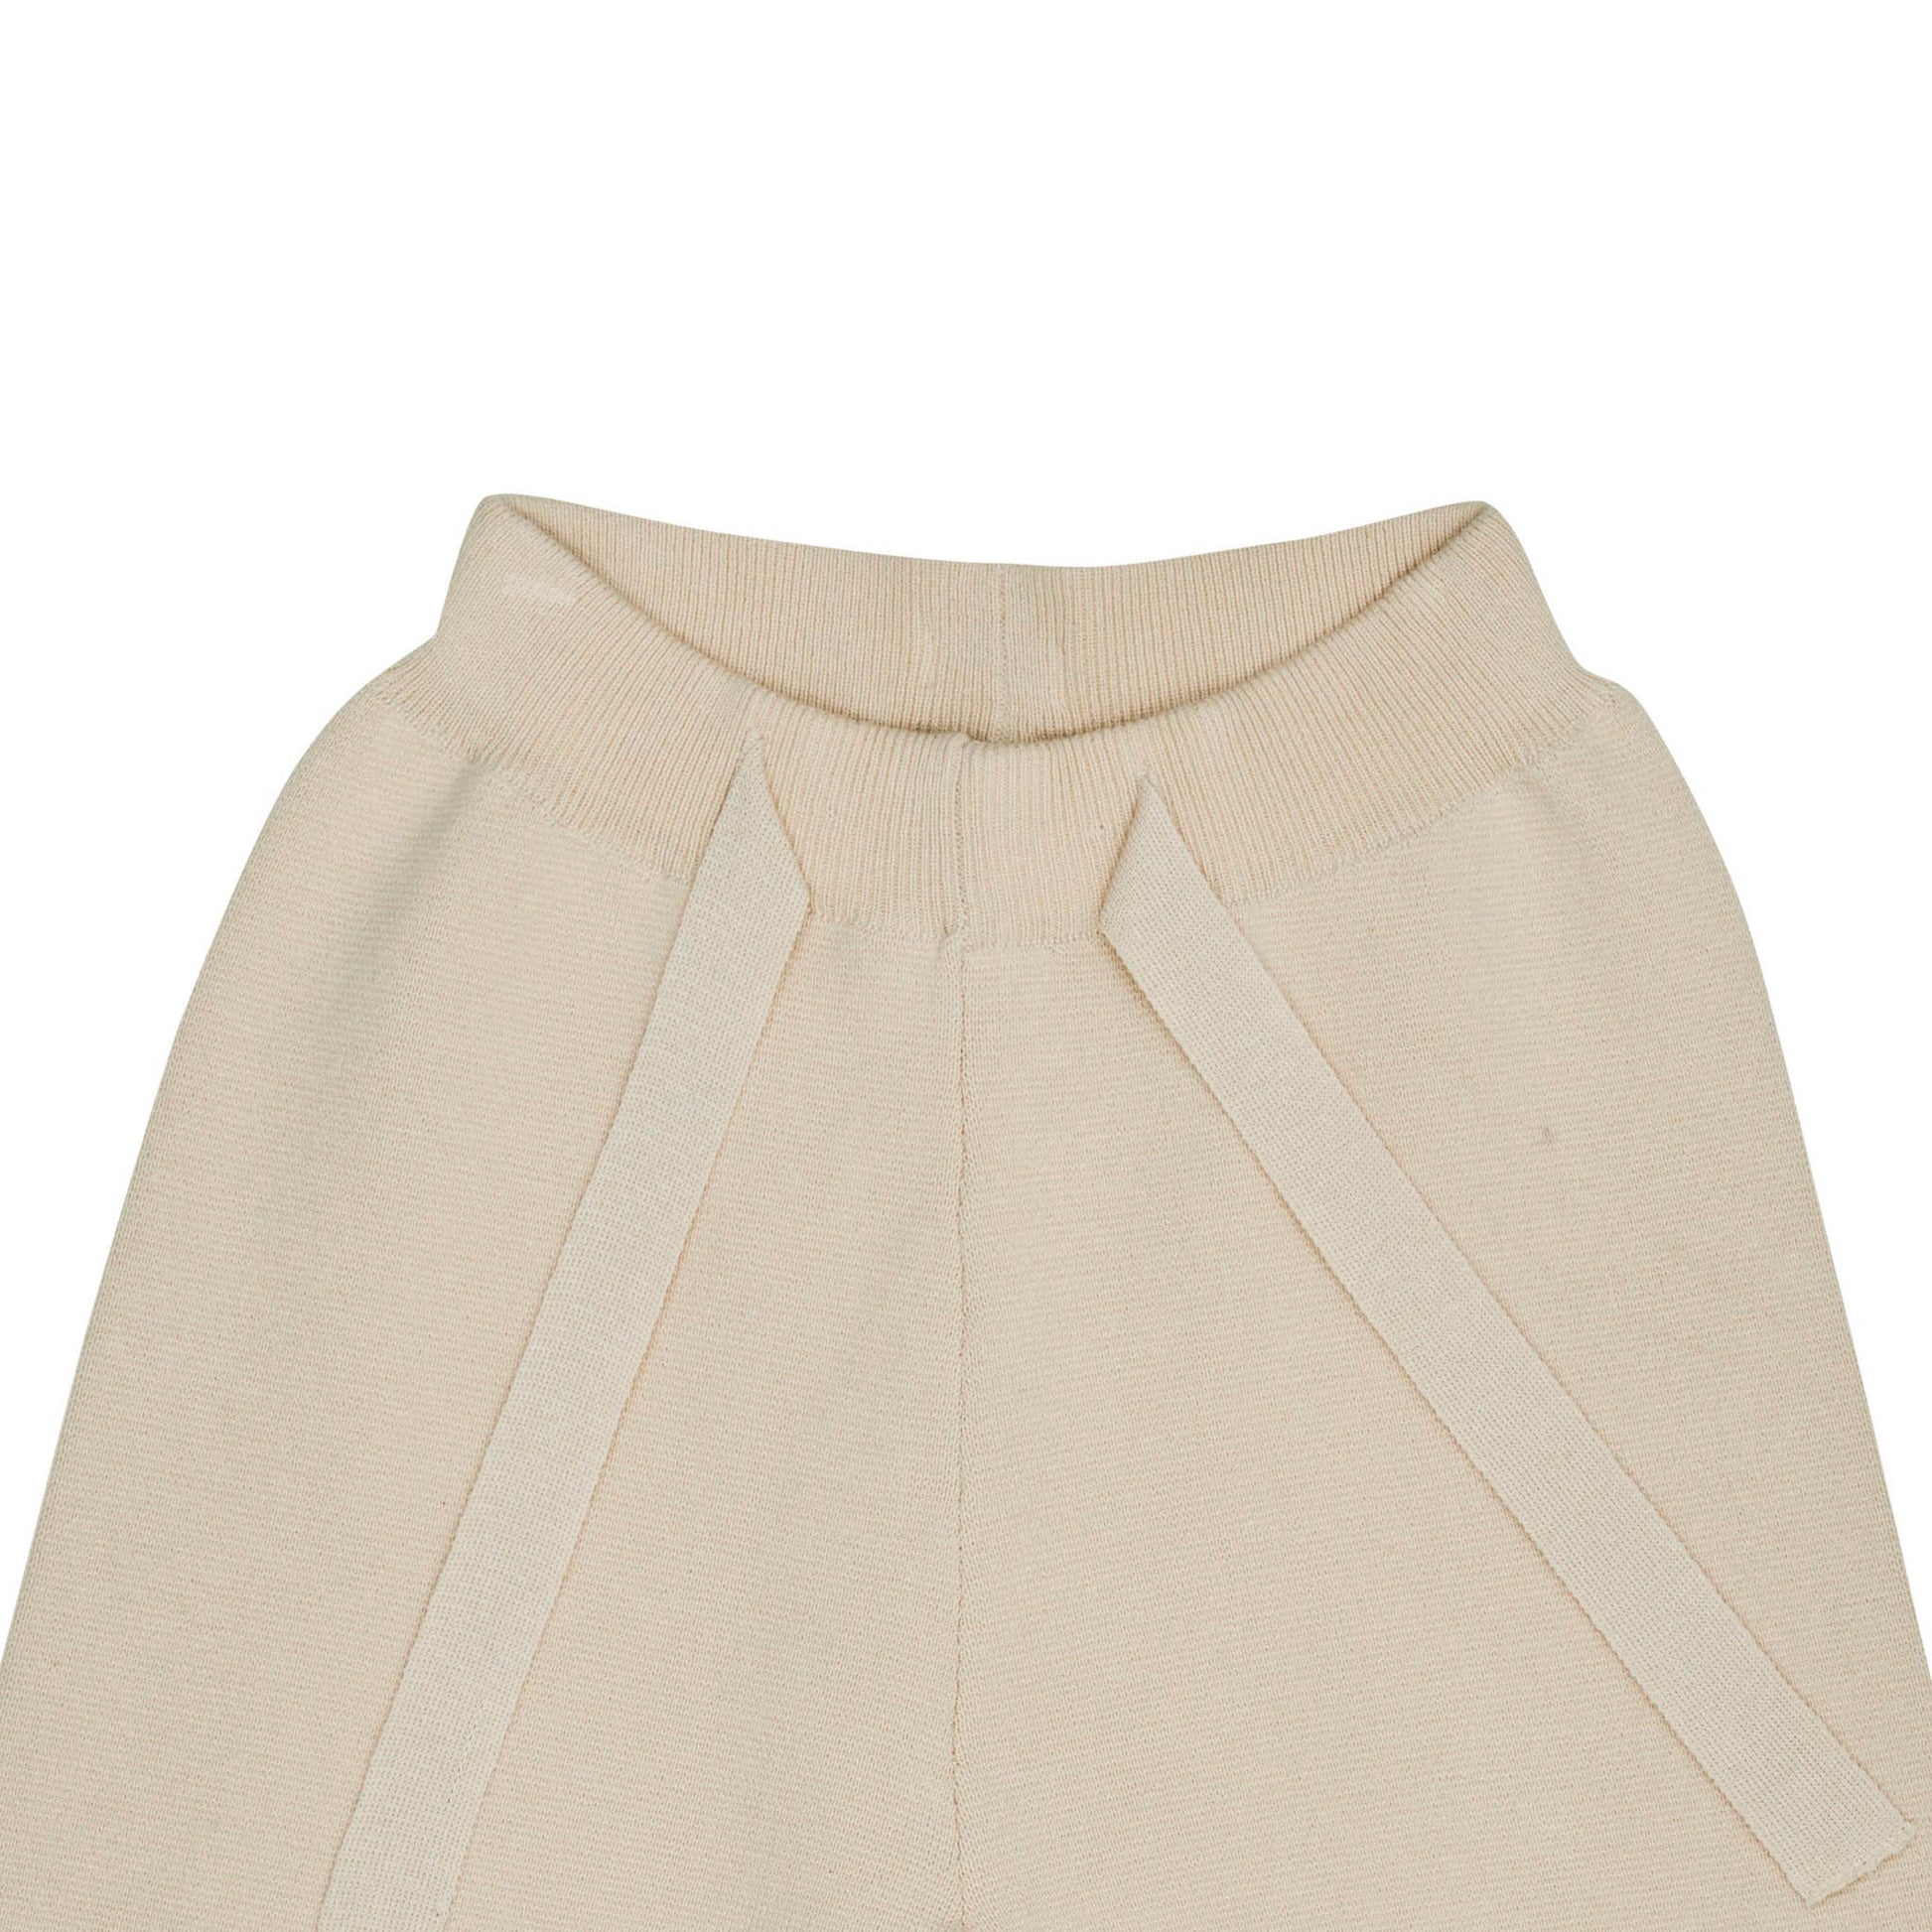 Donsje - Hose "Invi Trousers" | soft sand - Leja Concept Store